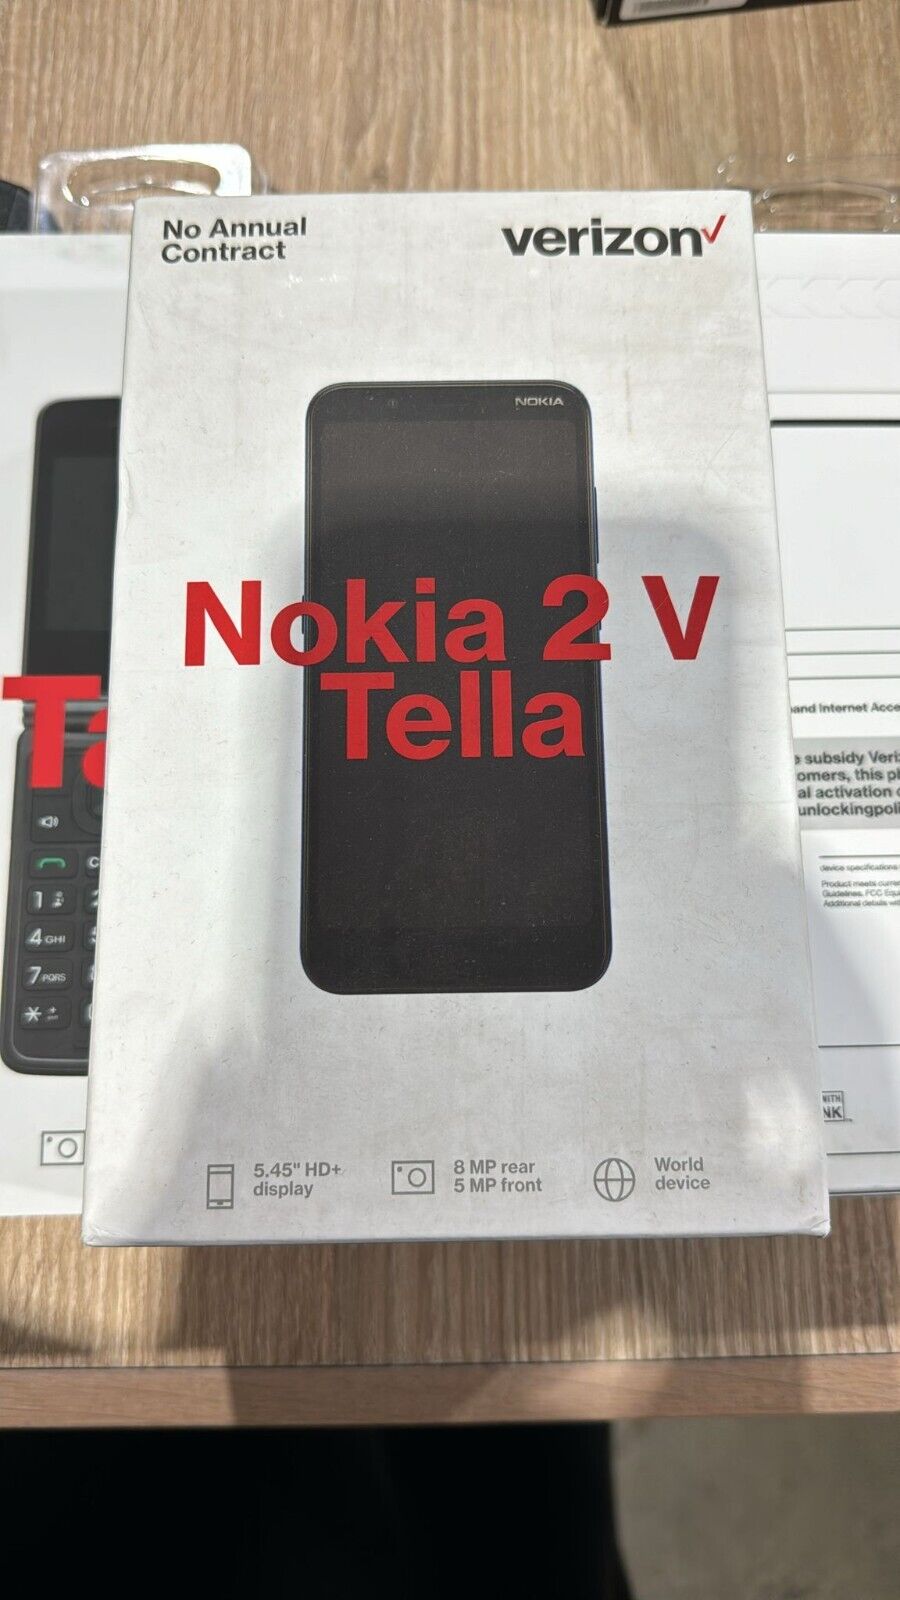 Nokia 2 V Tella TA-1221 FOR Verizon Wireless ONLY Cell Phone